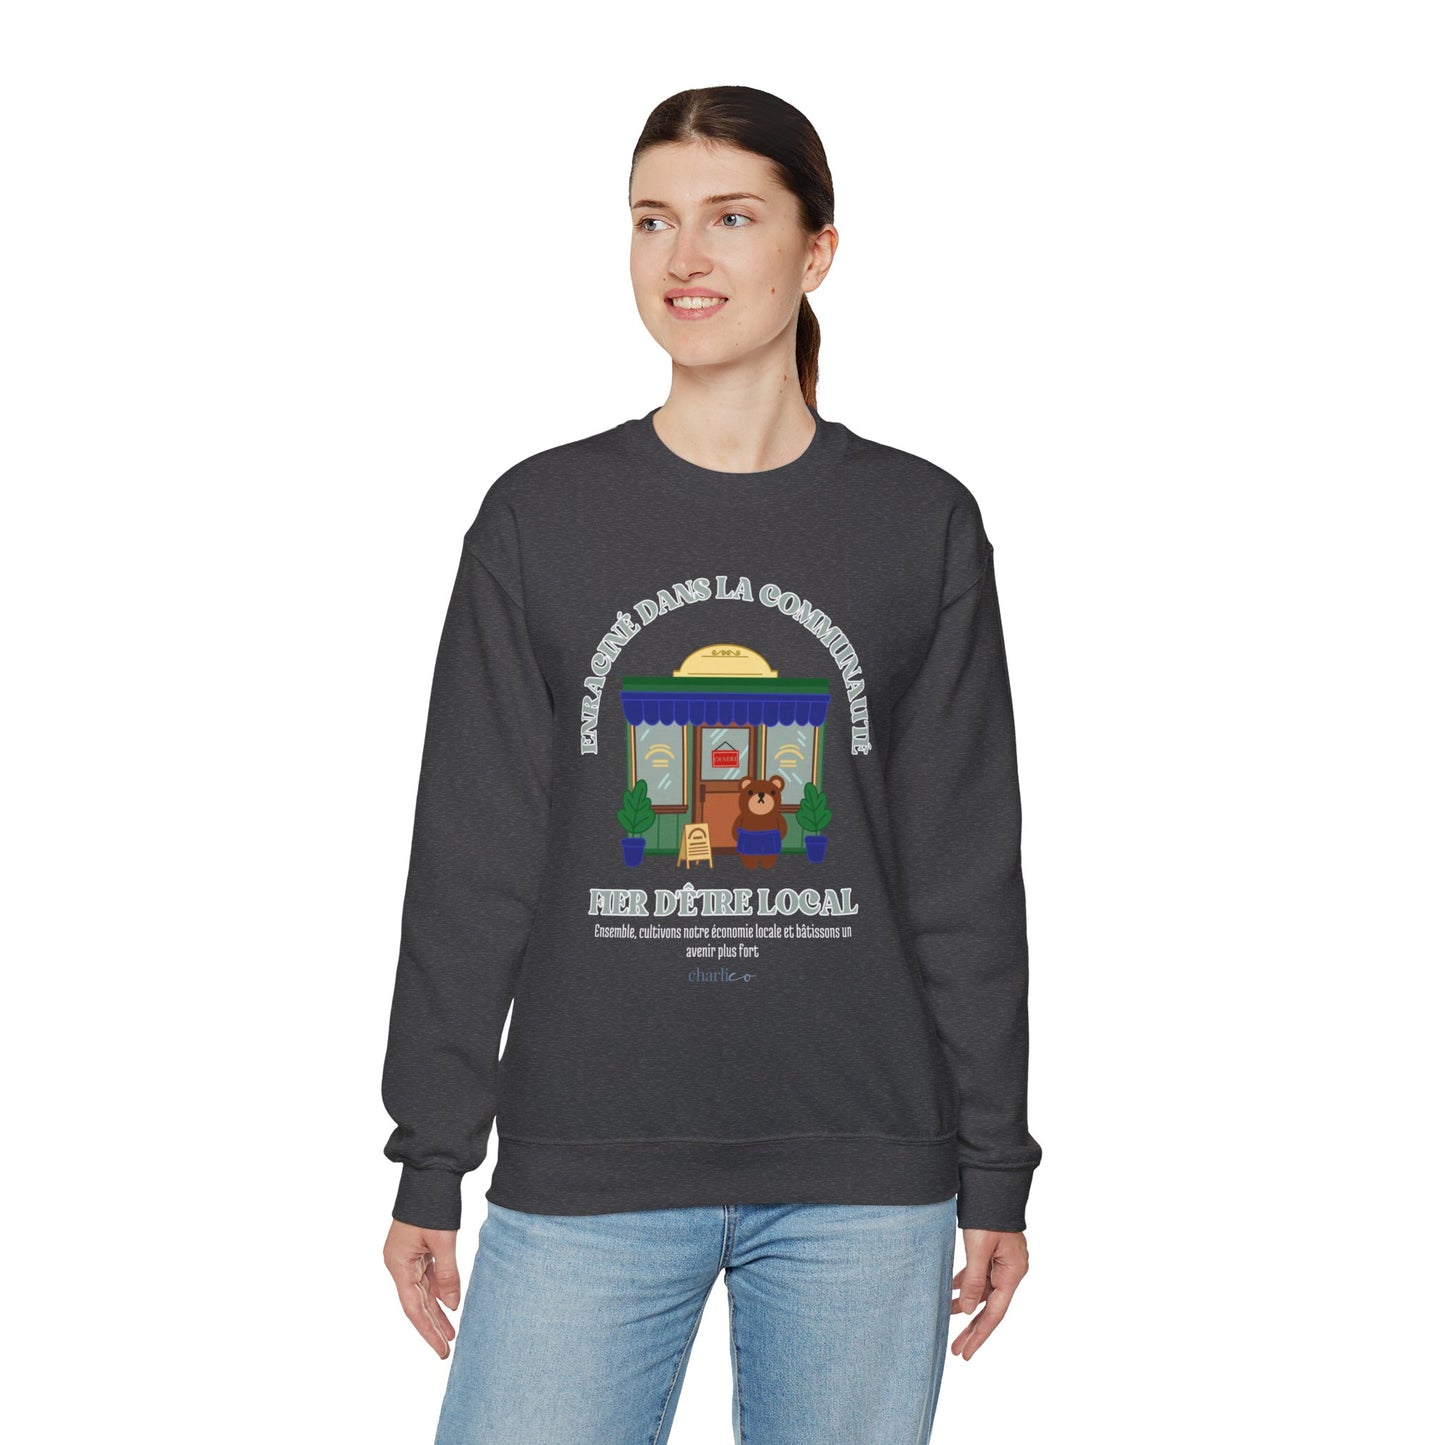 ENCOURAGE LOCAL bear crewneck sweatshirt - for adults